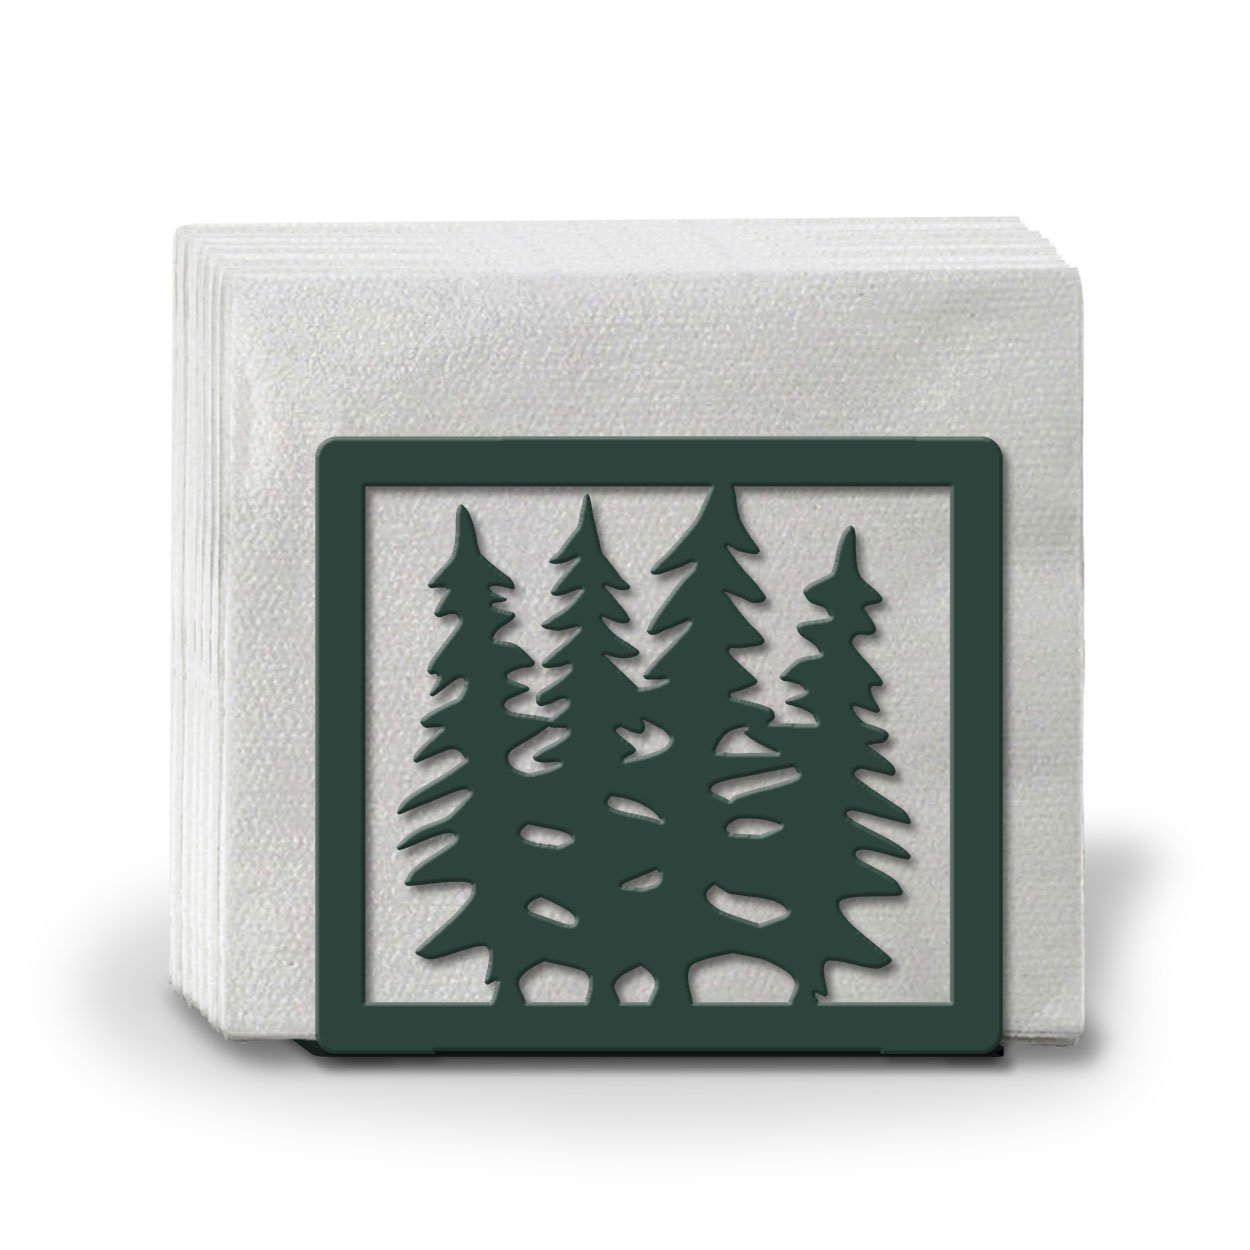 621116 - Moose and Trees Metal Napkin Holder - Choose Color